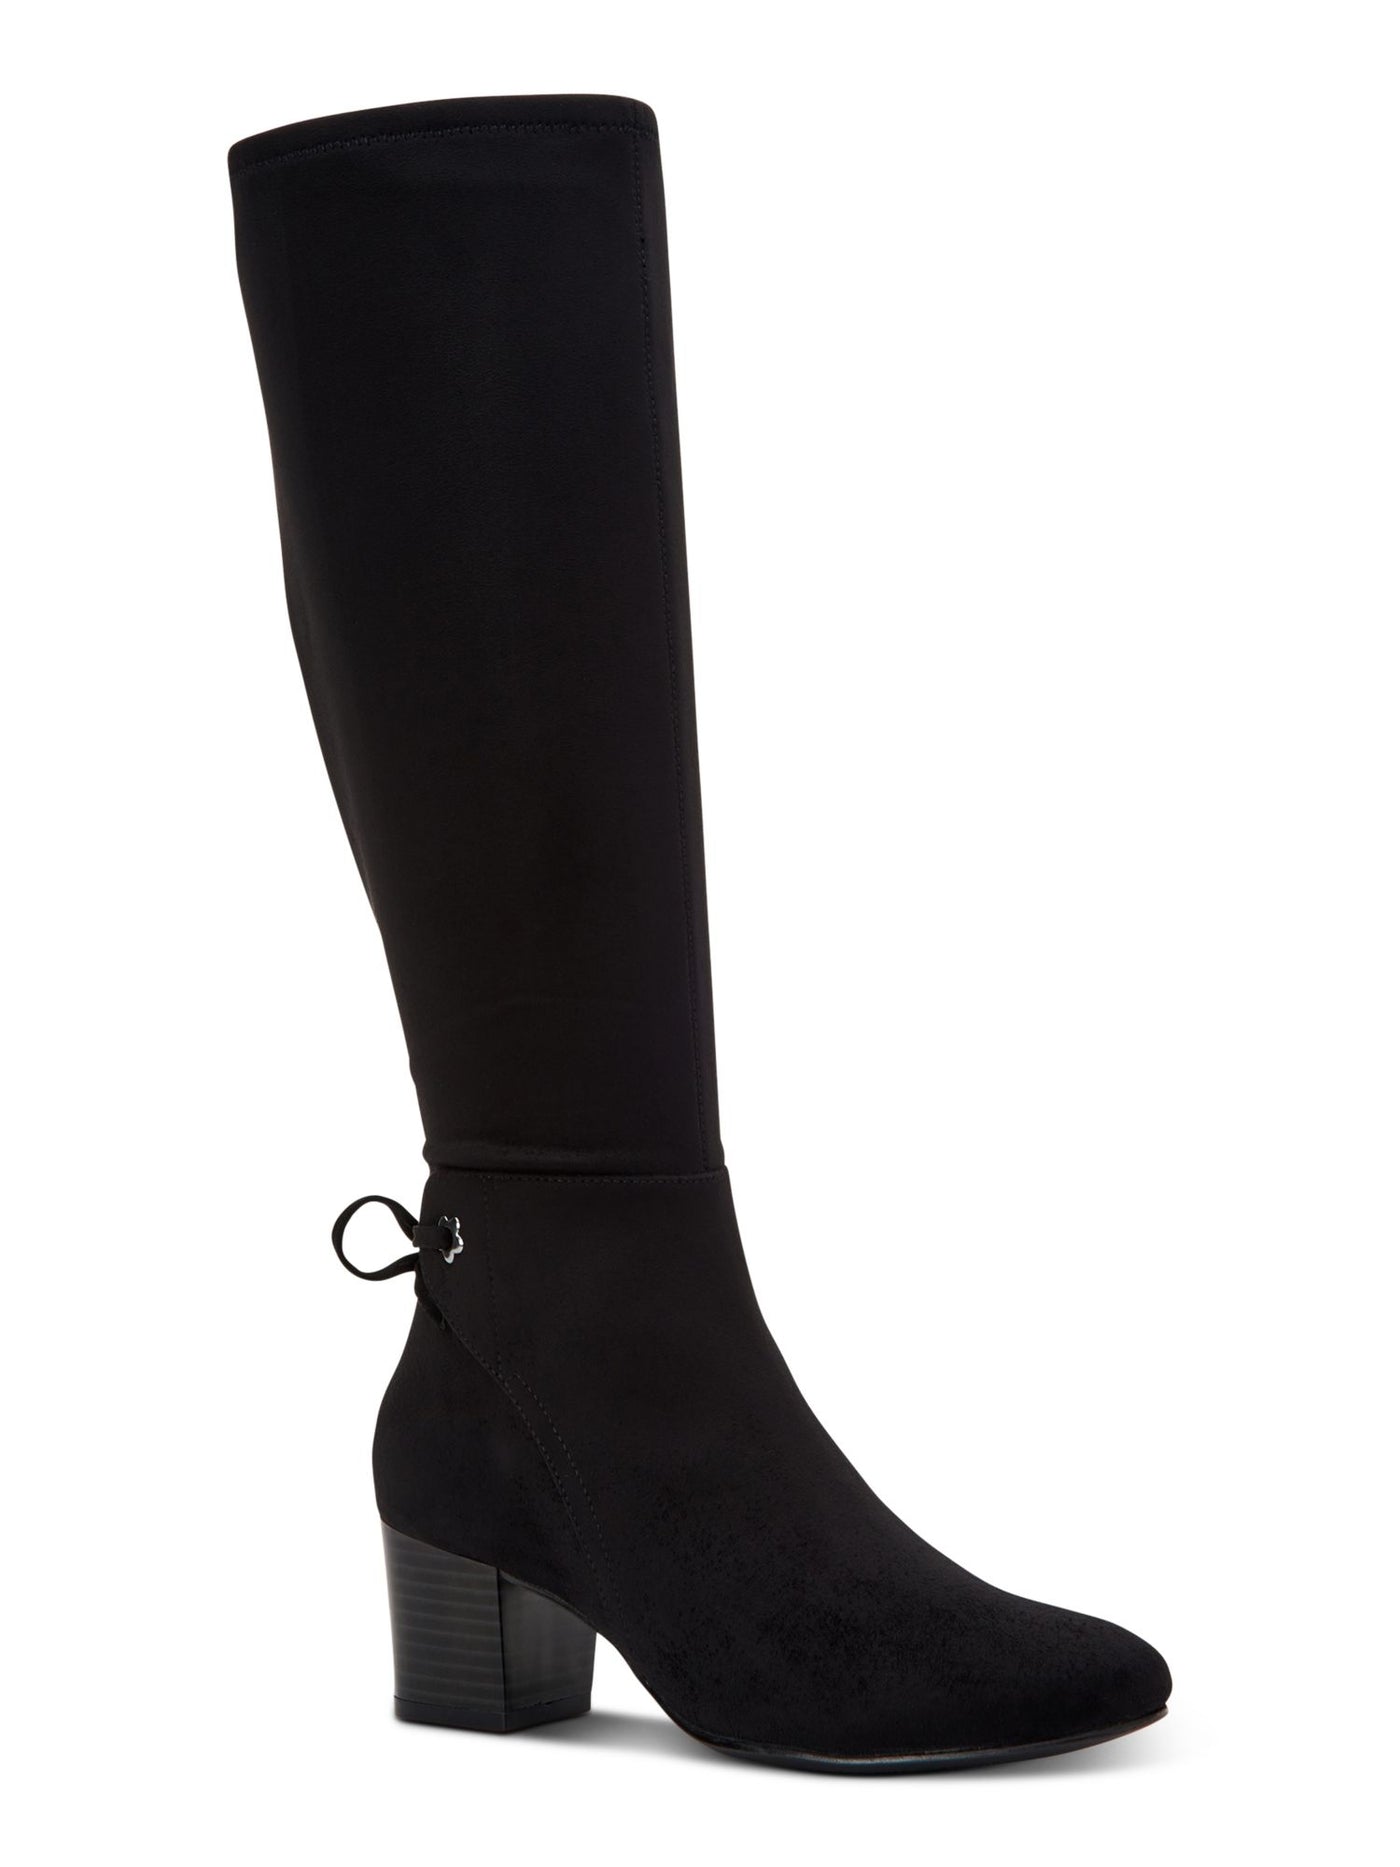 CHARTER CLUB Womens Black Bow Accent Almond Toe Block Heel Zip-Up Dress Boots 7.5